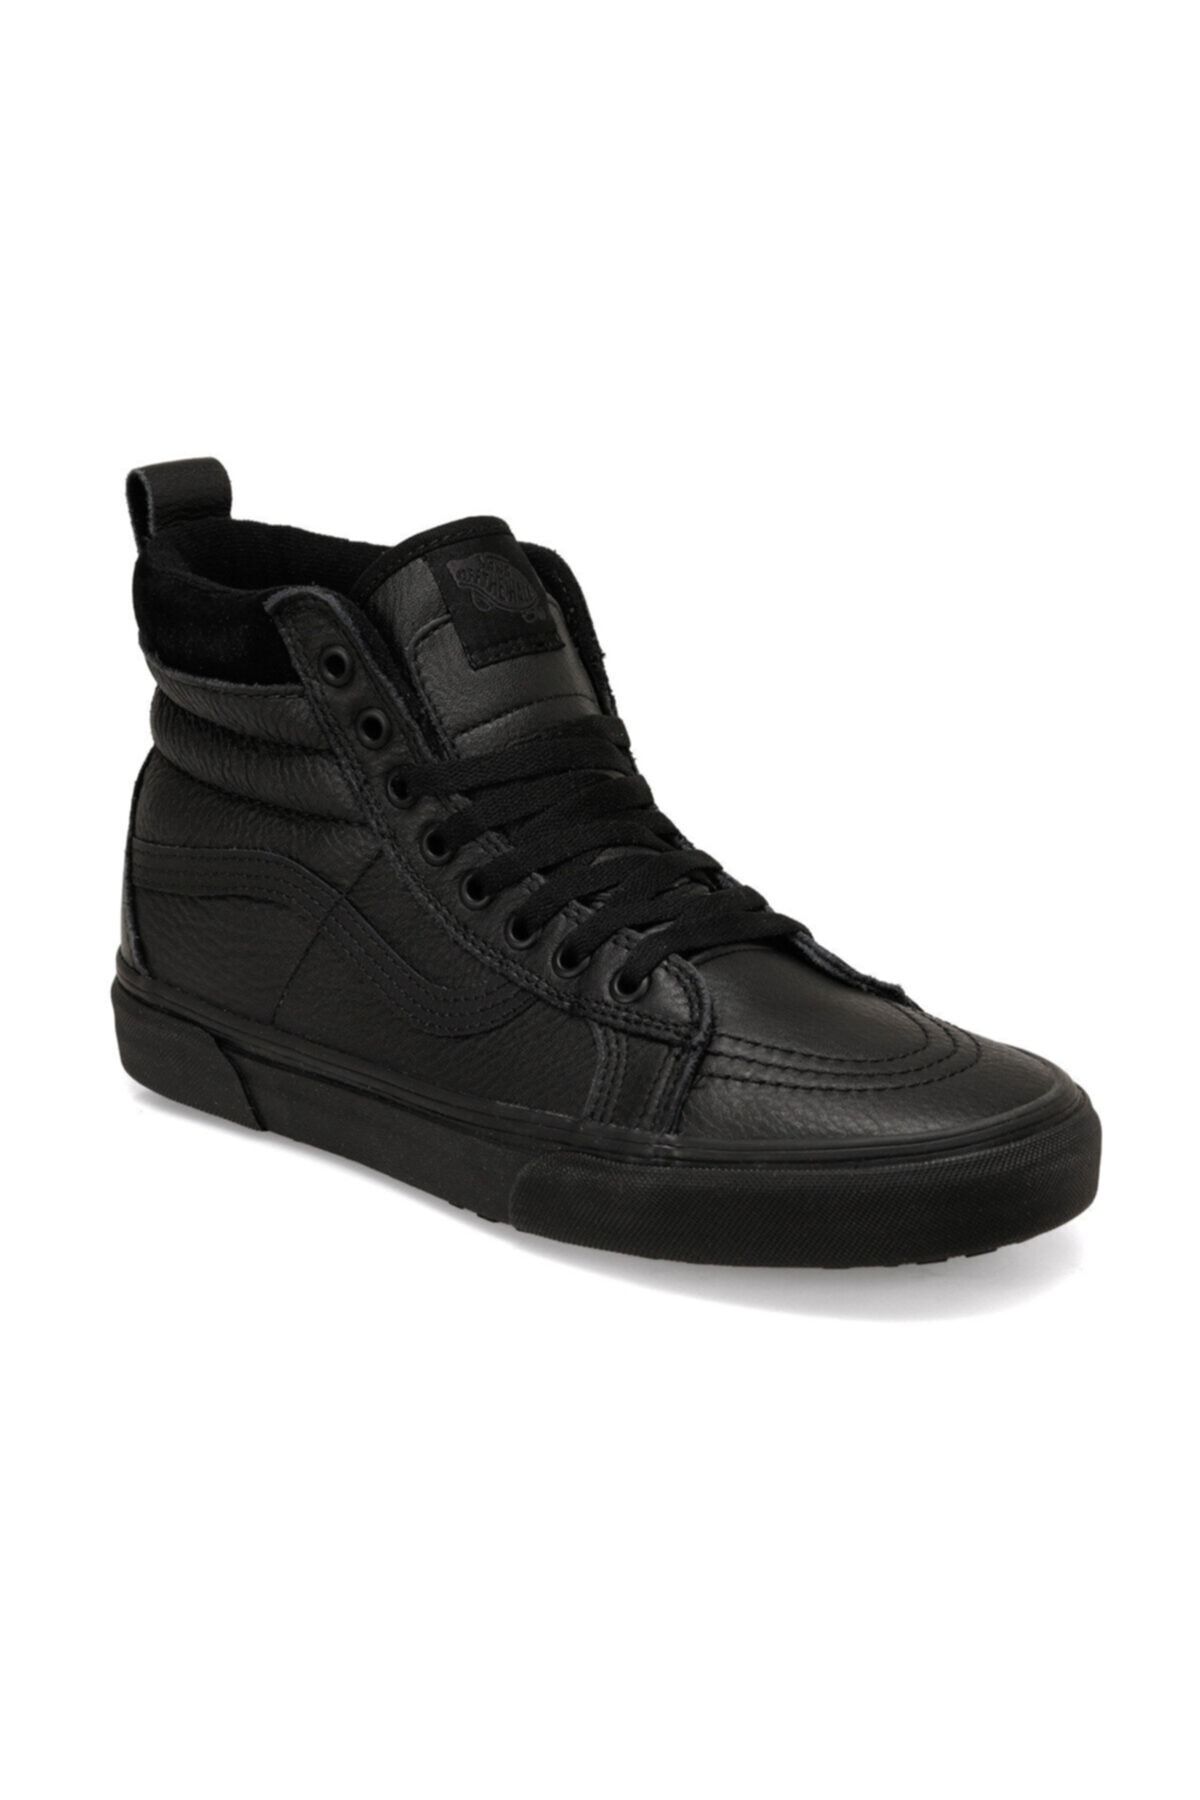 Vans UA SK8-HI MTE Siyah Erkek Çocuk Sneaker Ayakkabı 100583440